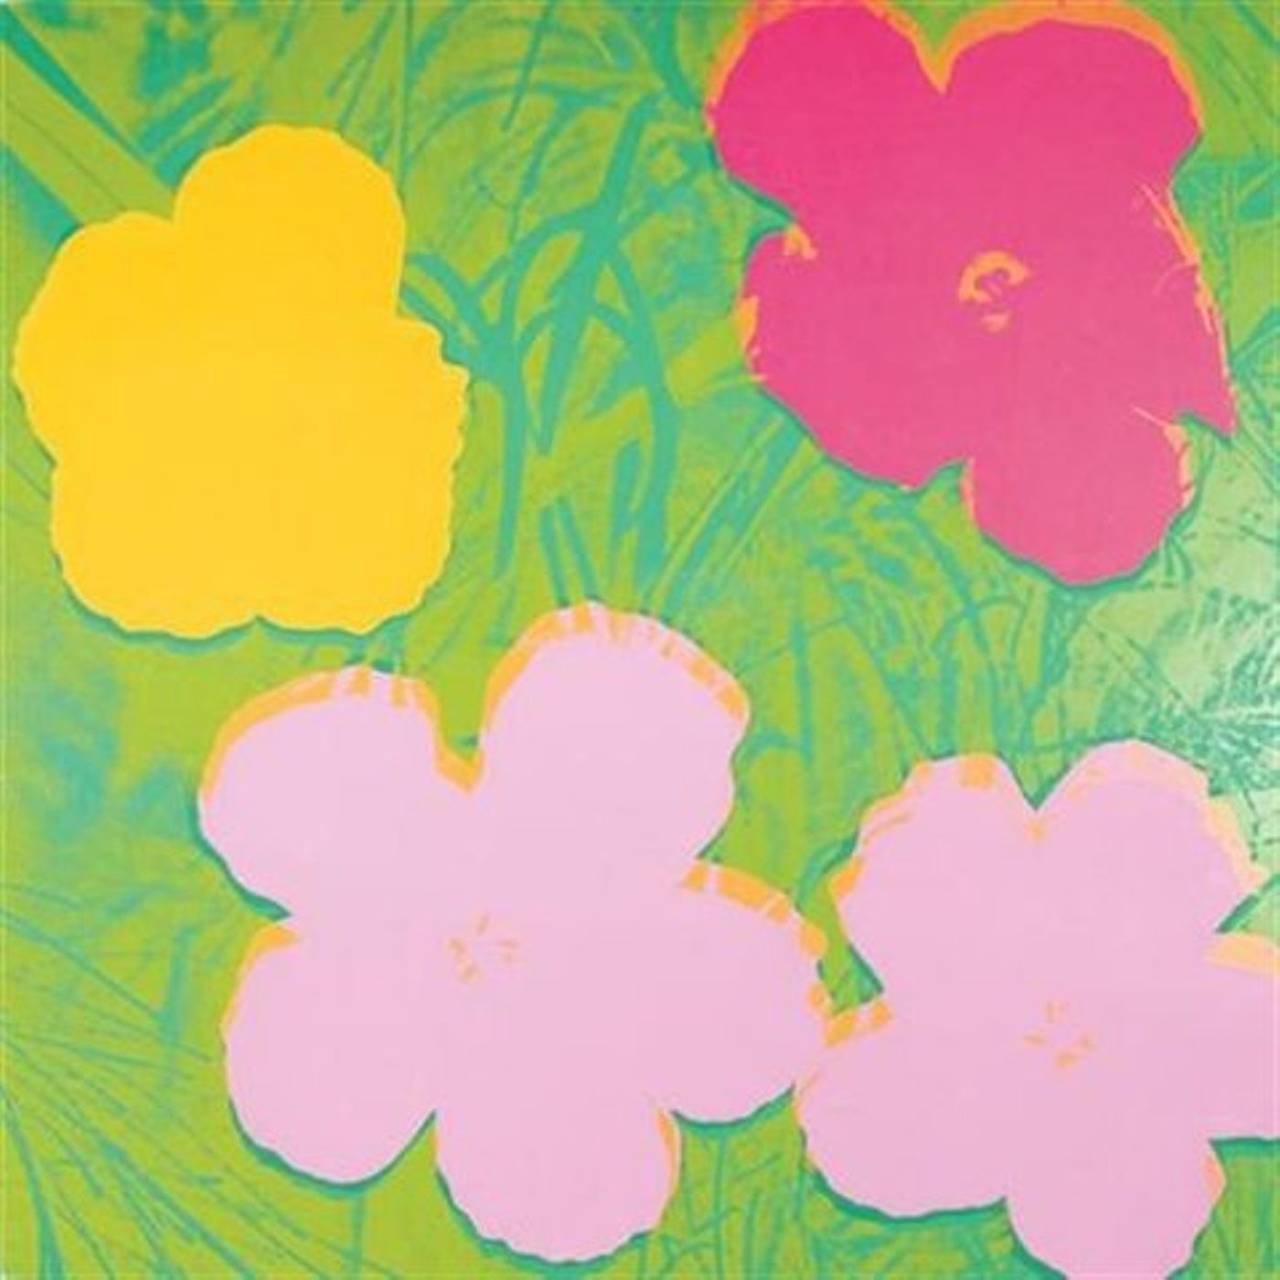 Flowers II.68 - Print by Andy Warhol